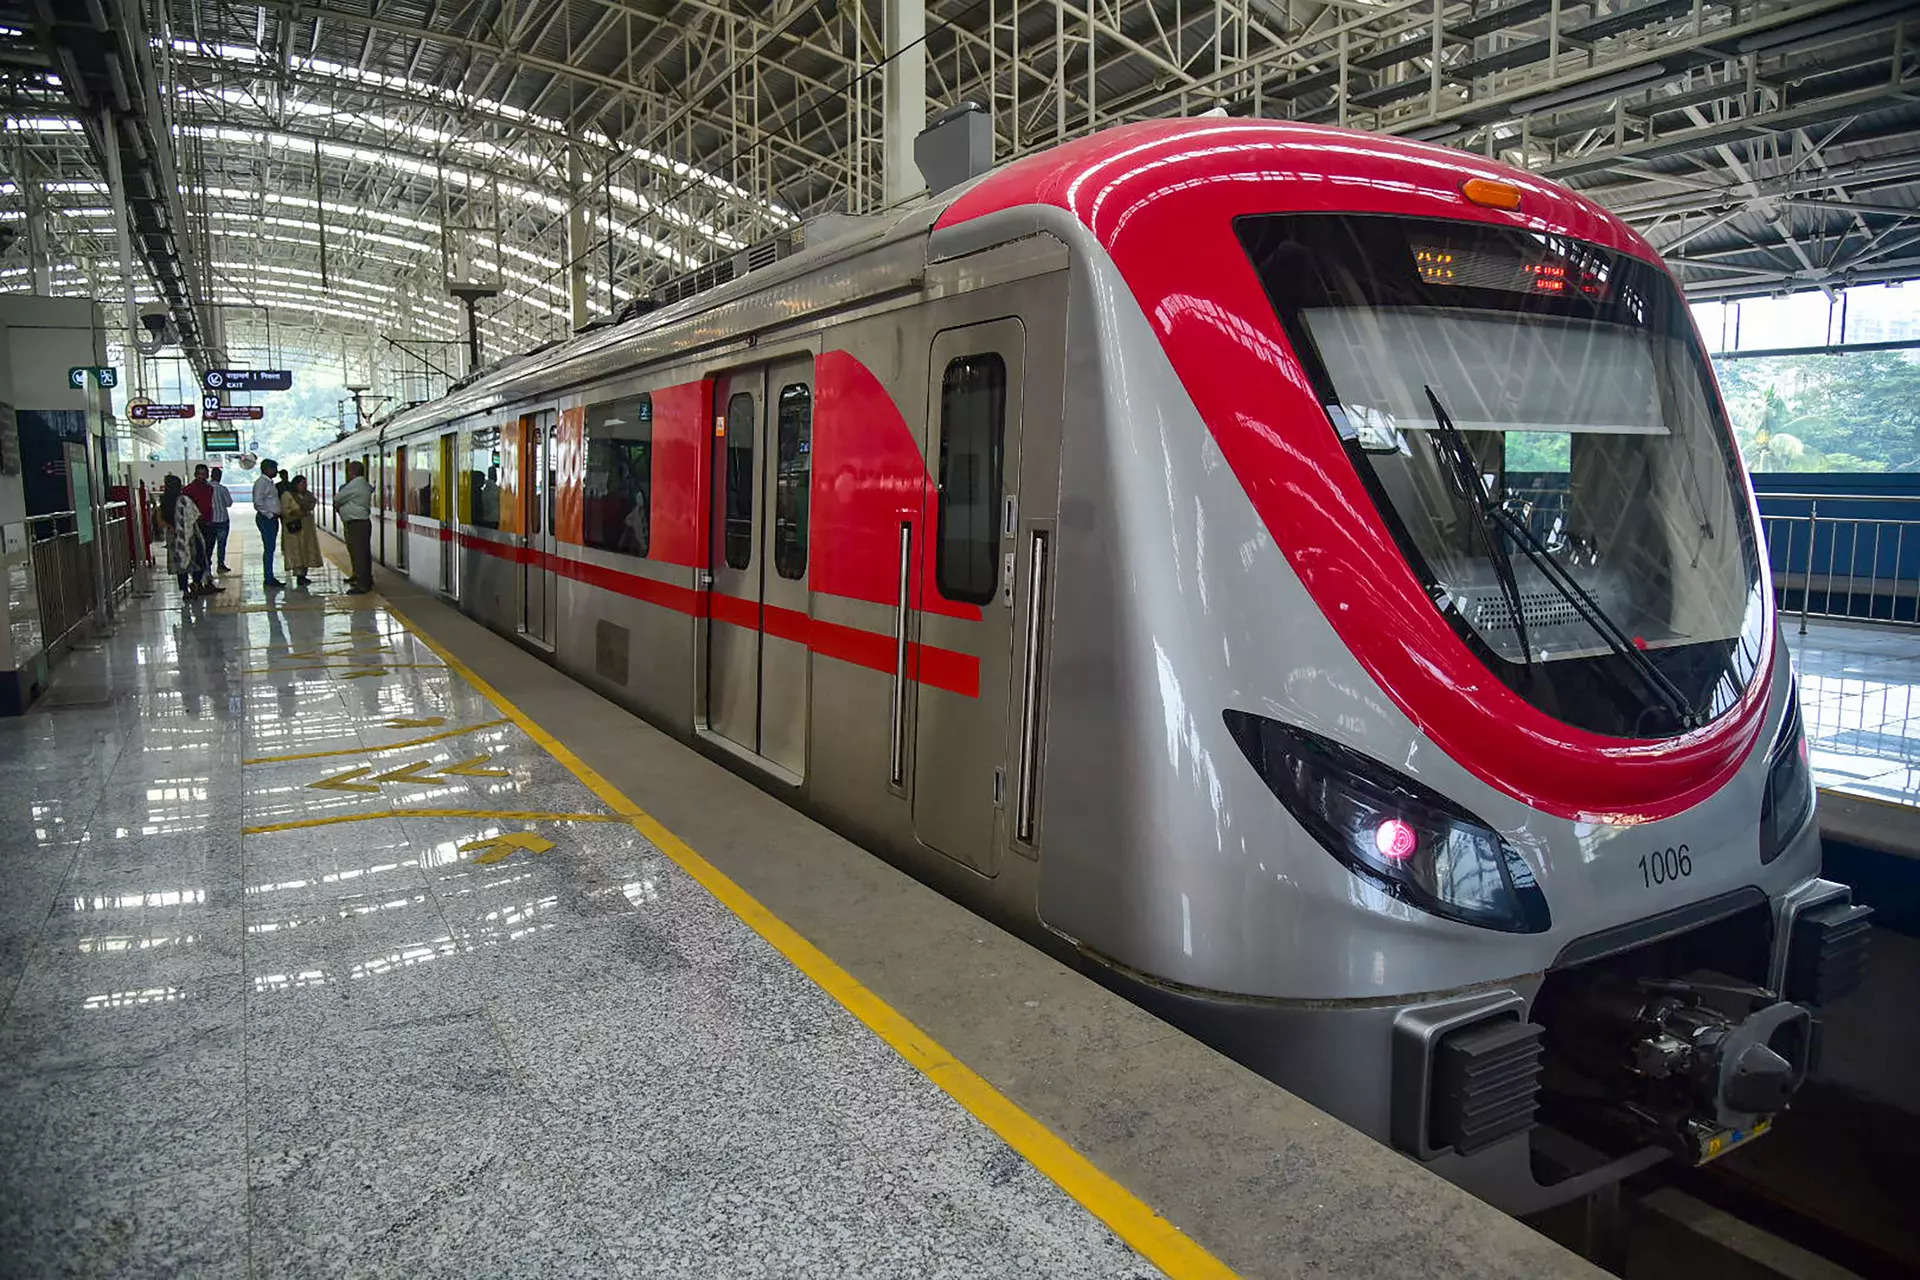 Excitement over Navi Mumbai Metro on Day 1: Over 5,000 passengers